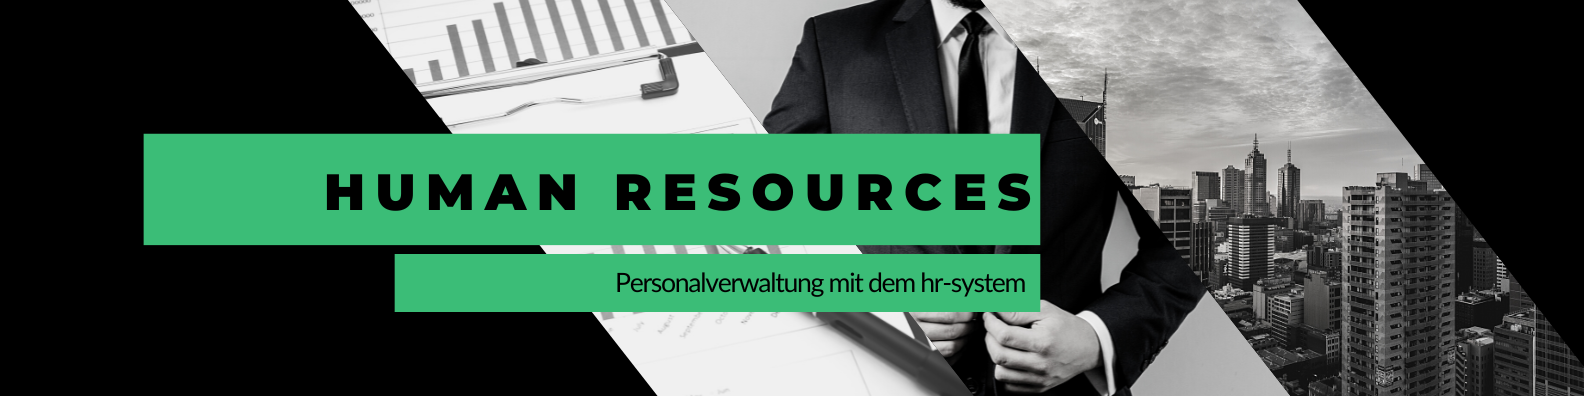 human resources header